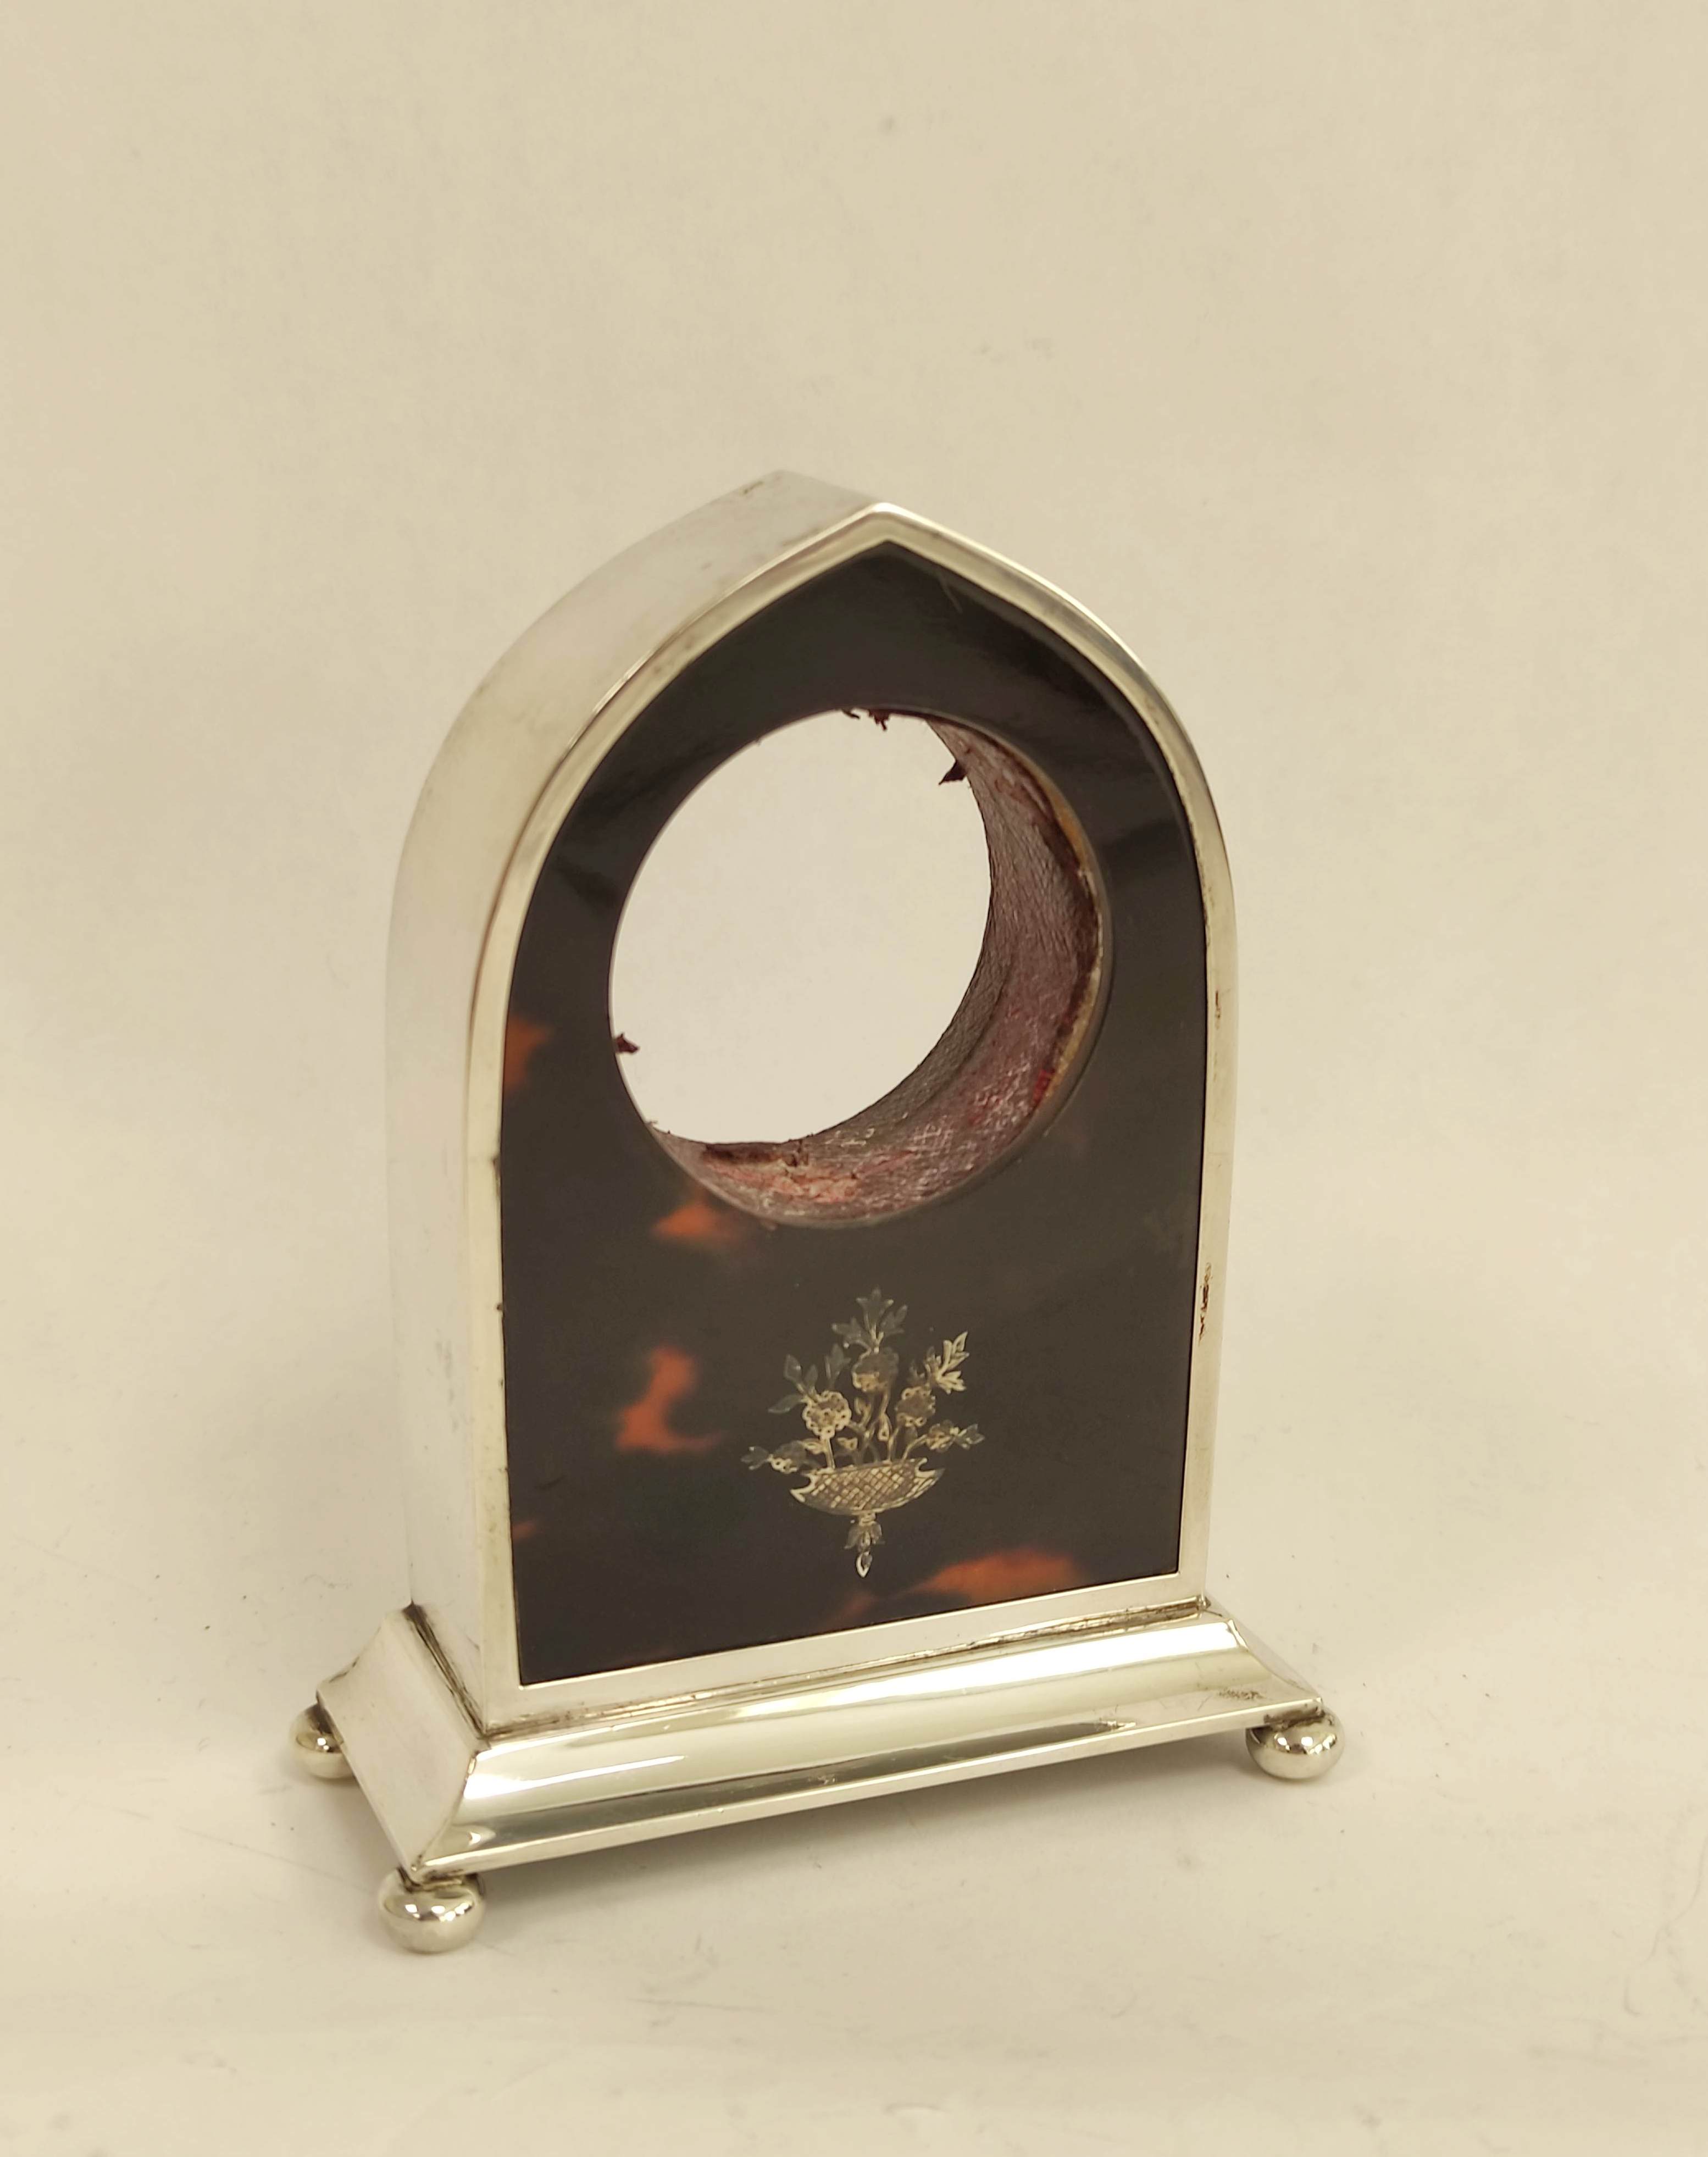 Silver inlaid tortoiseshell boudoir timepiece case of lancet shape, Chester 1920, 12cm, timepiece